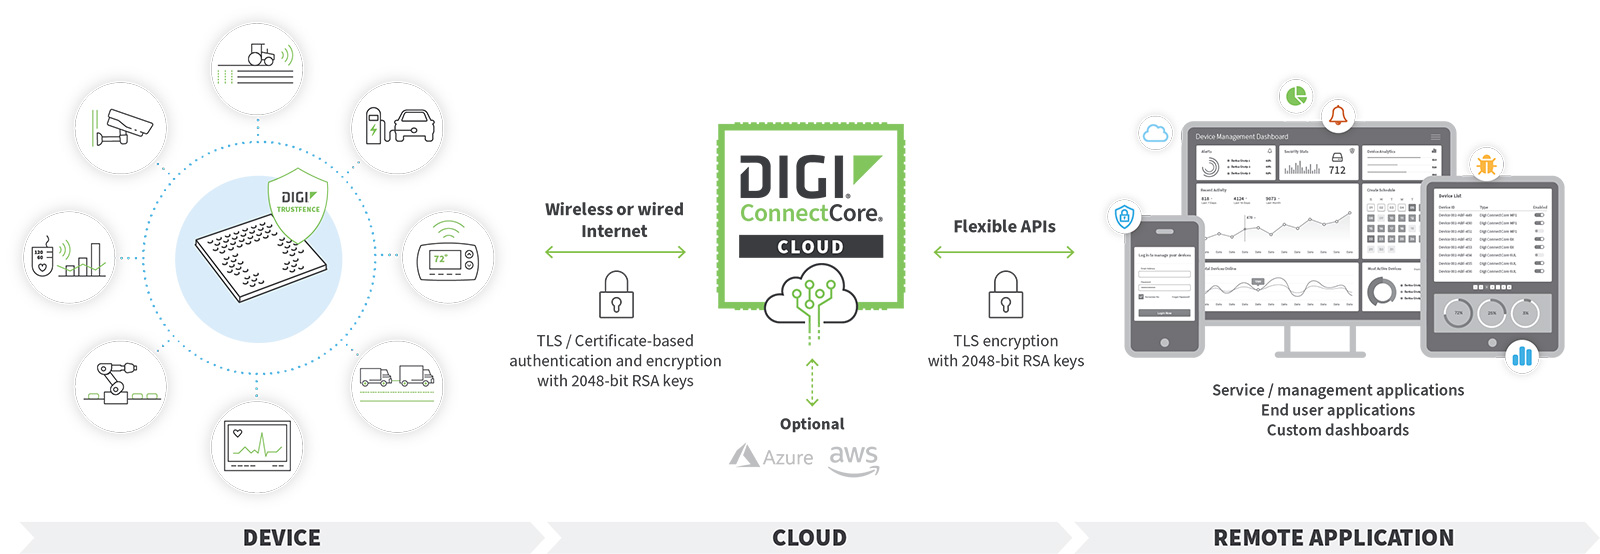 digi-connectcore-cloud-dienste-diagramm-a8.jpg